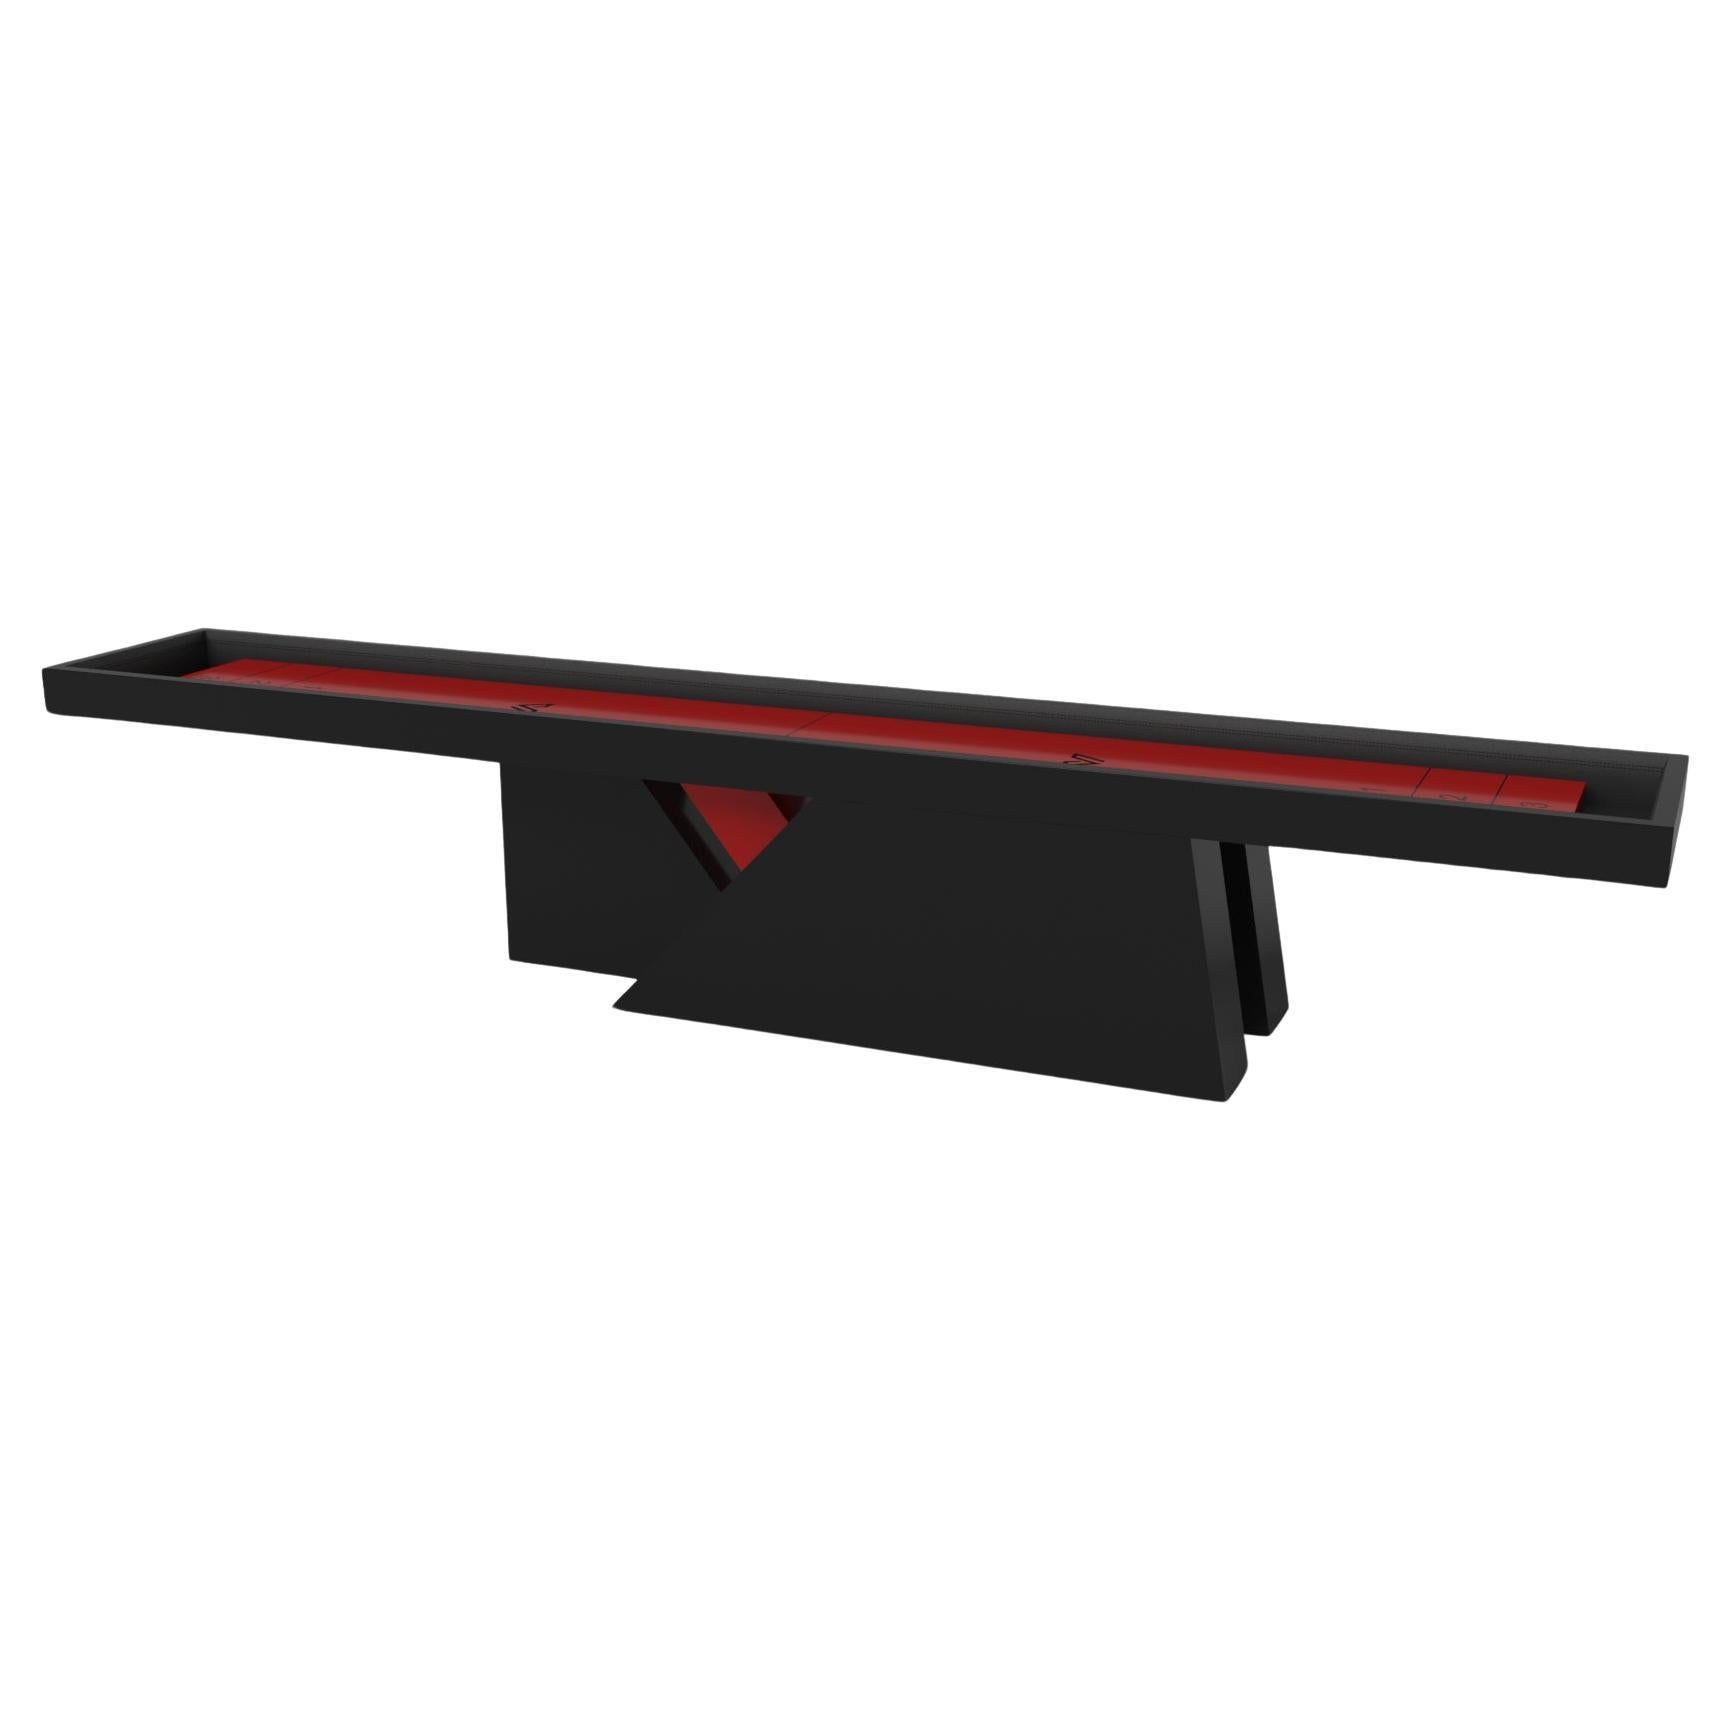 Elevate Customs tables Stilt Shuffleboard /Solid Pantone Black Color in 12' -USA